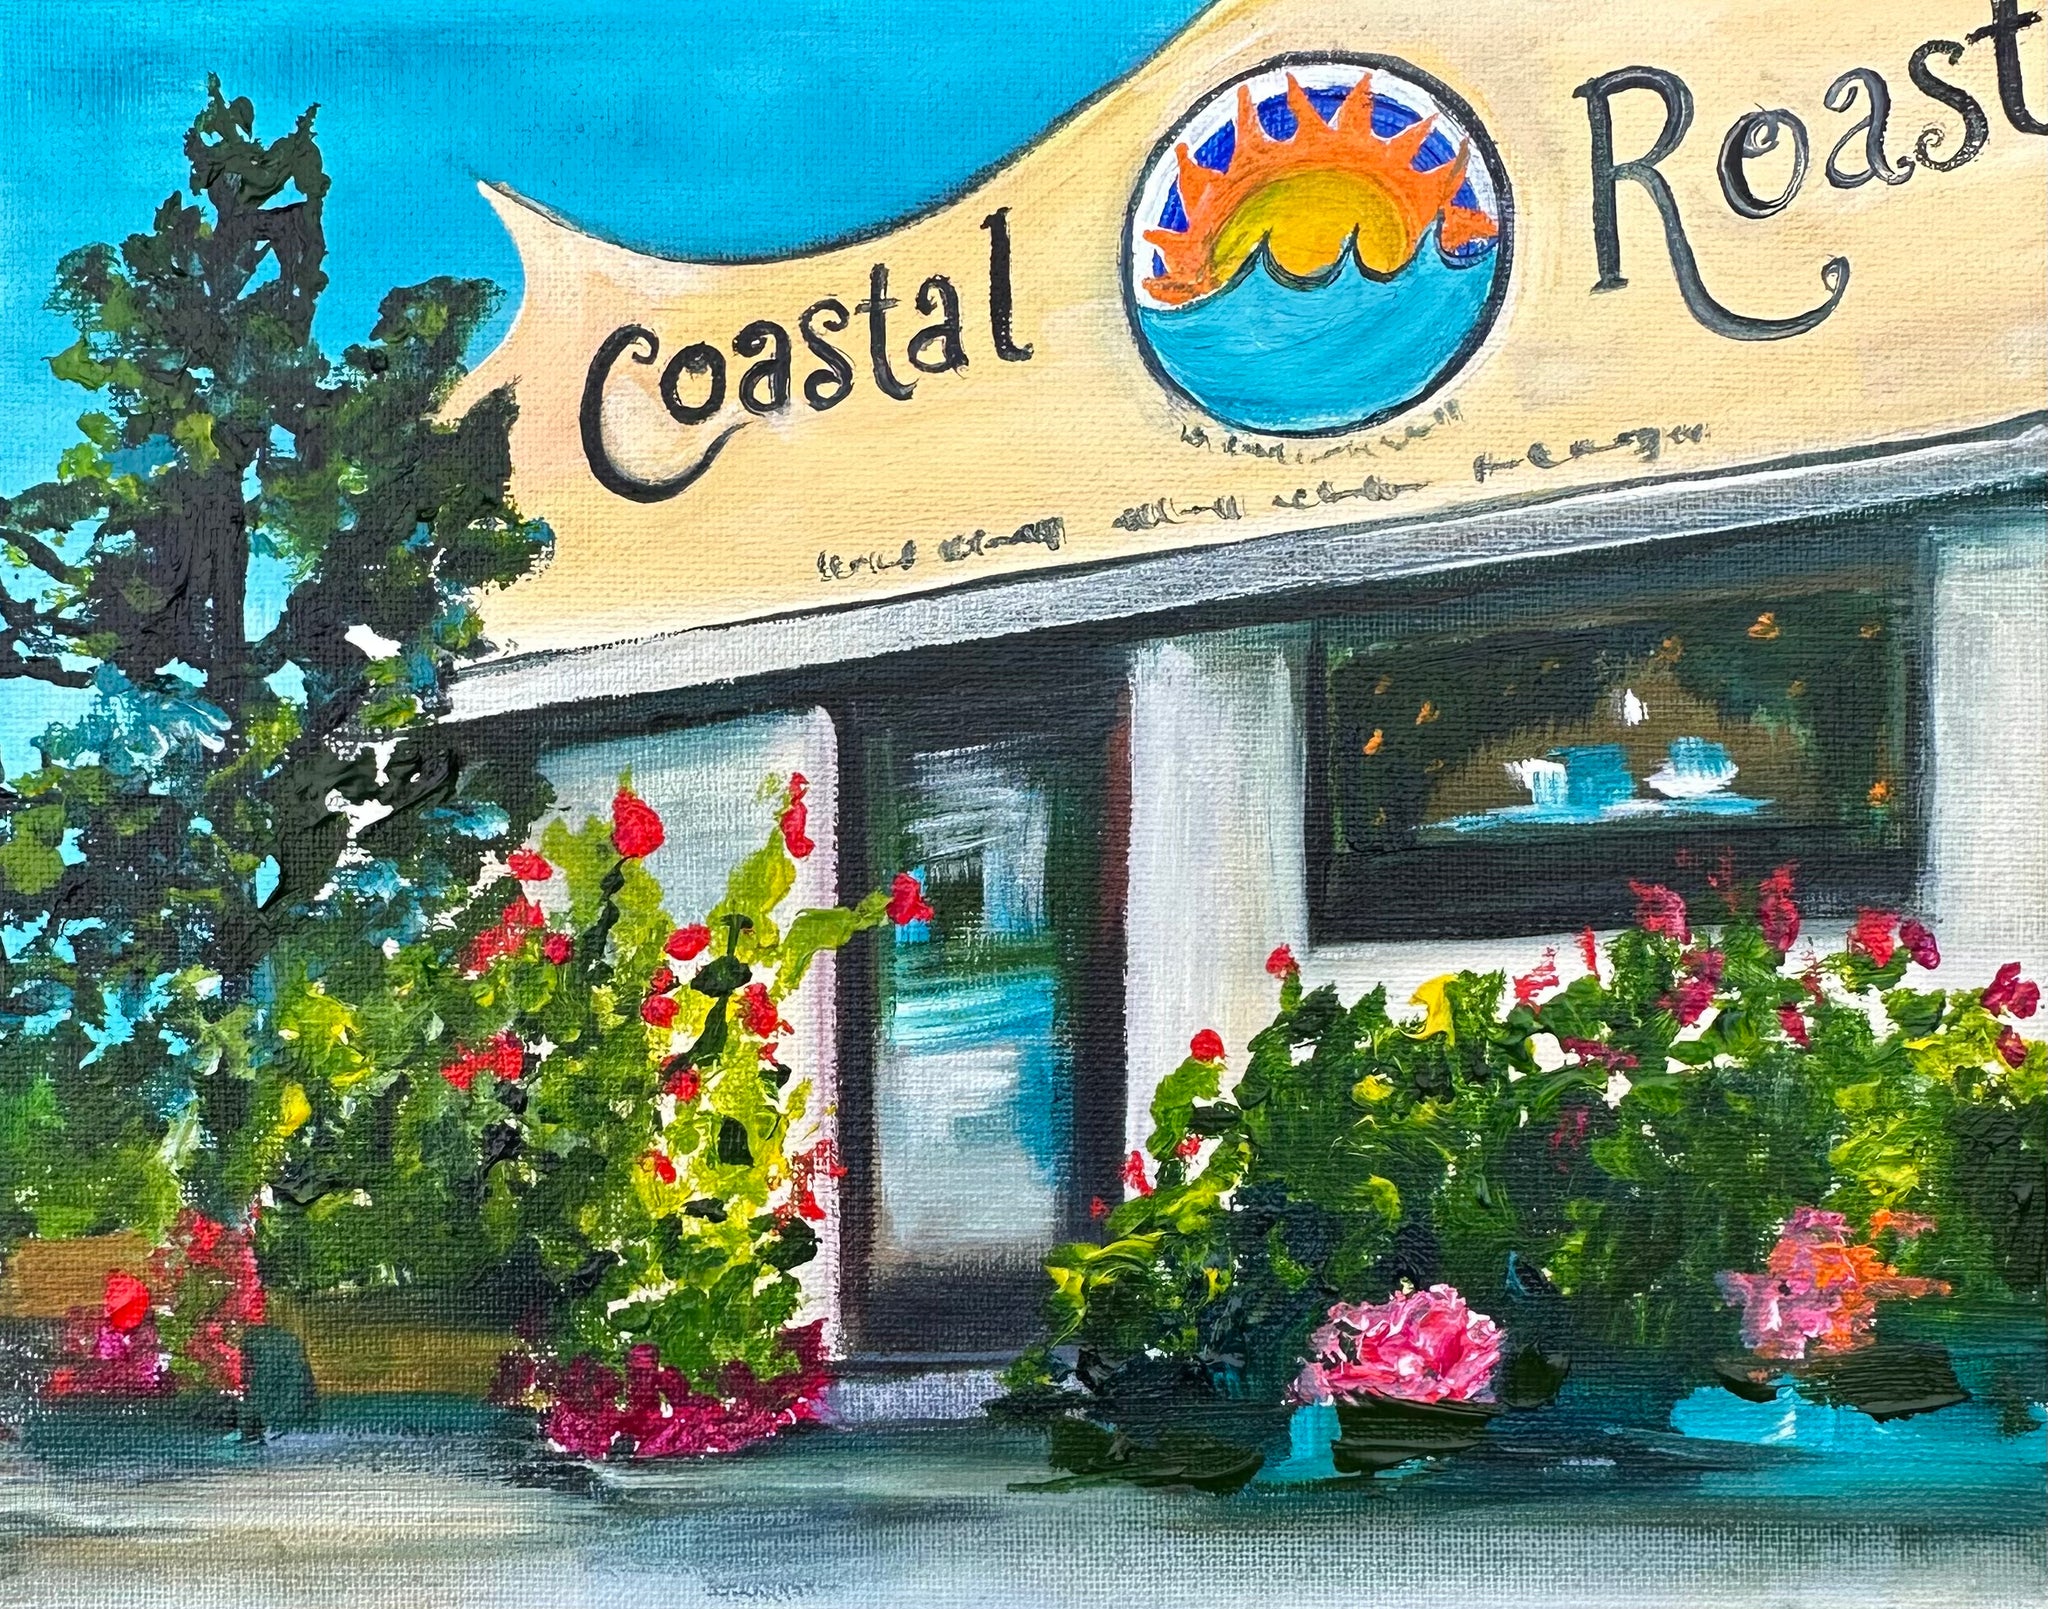 “Coastal”